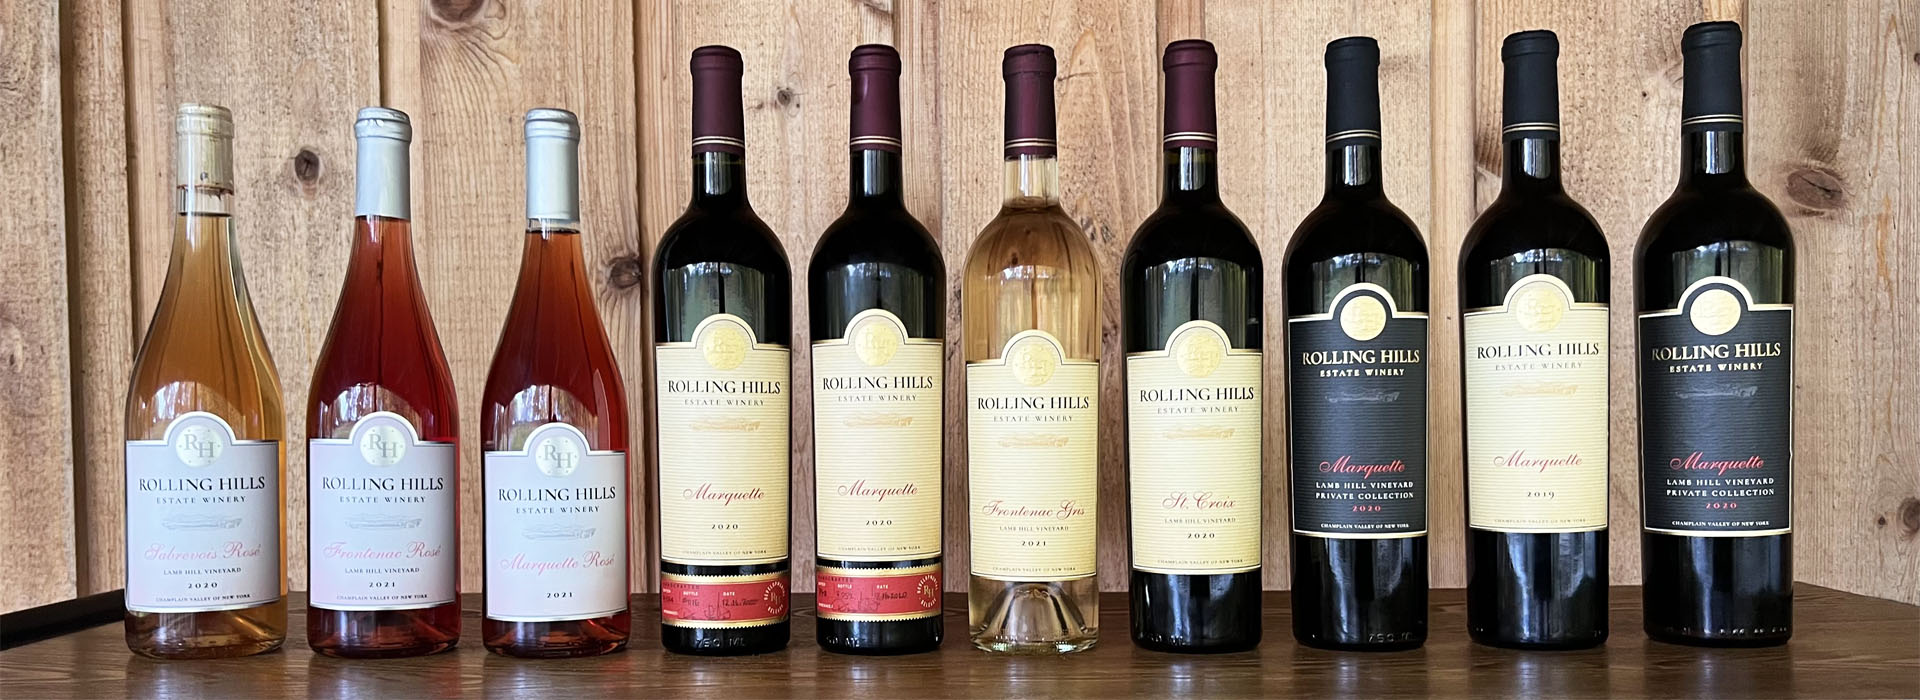 Rolling Hills Estate Vineyard wines